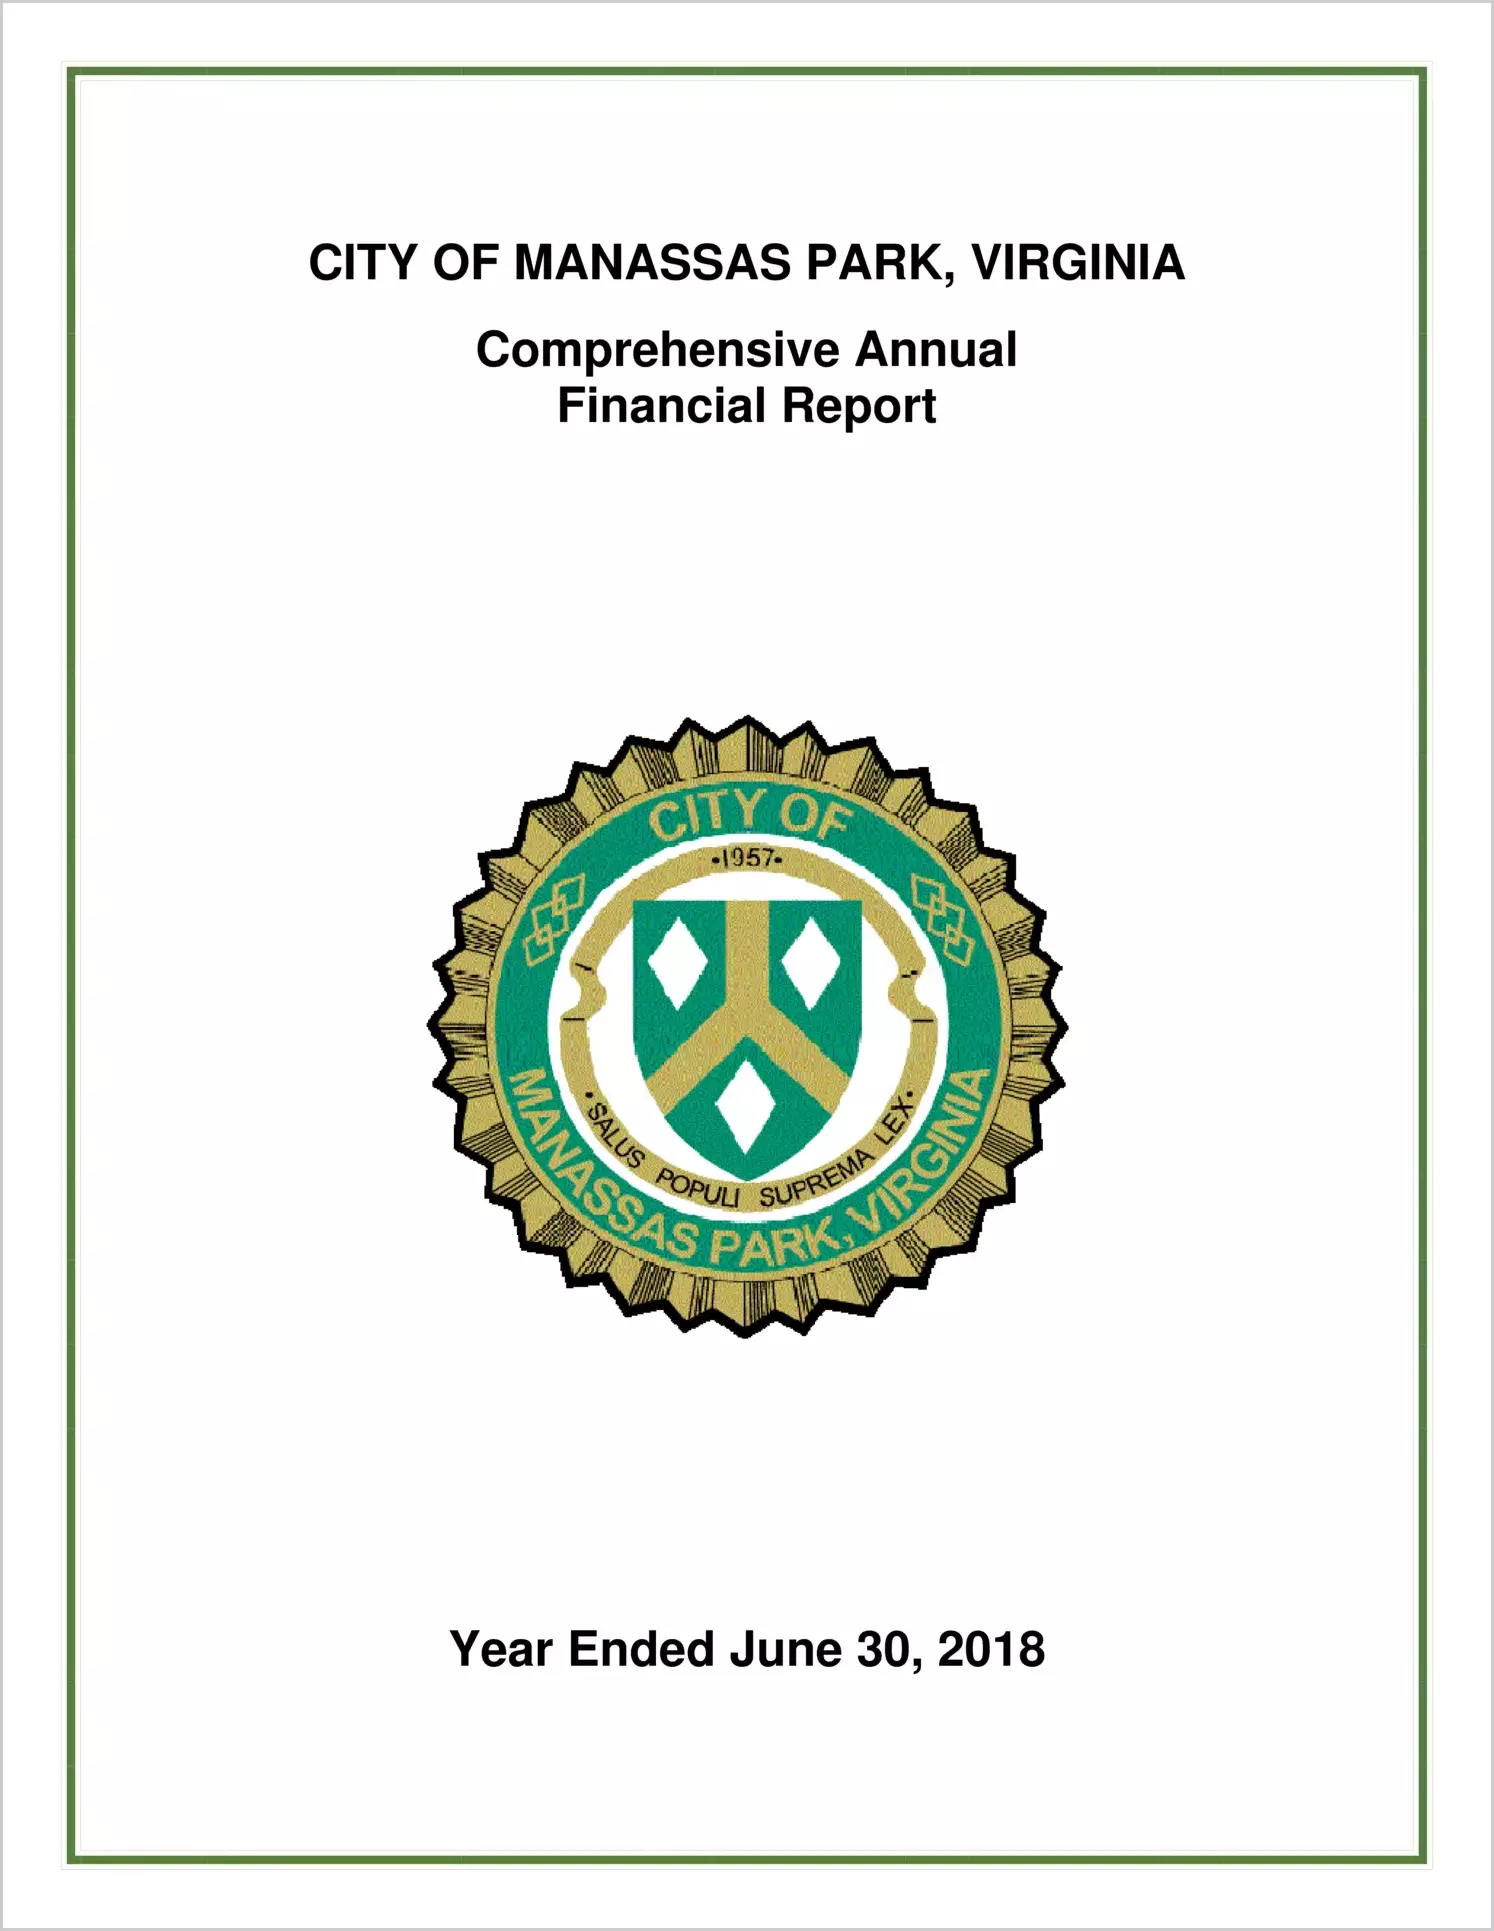 2018 Annual Financial Report for City of Manassas Park